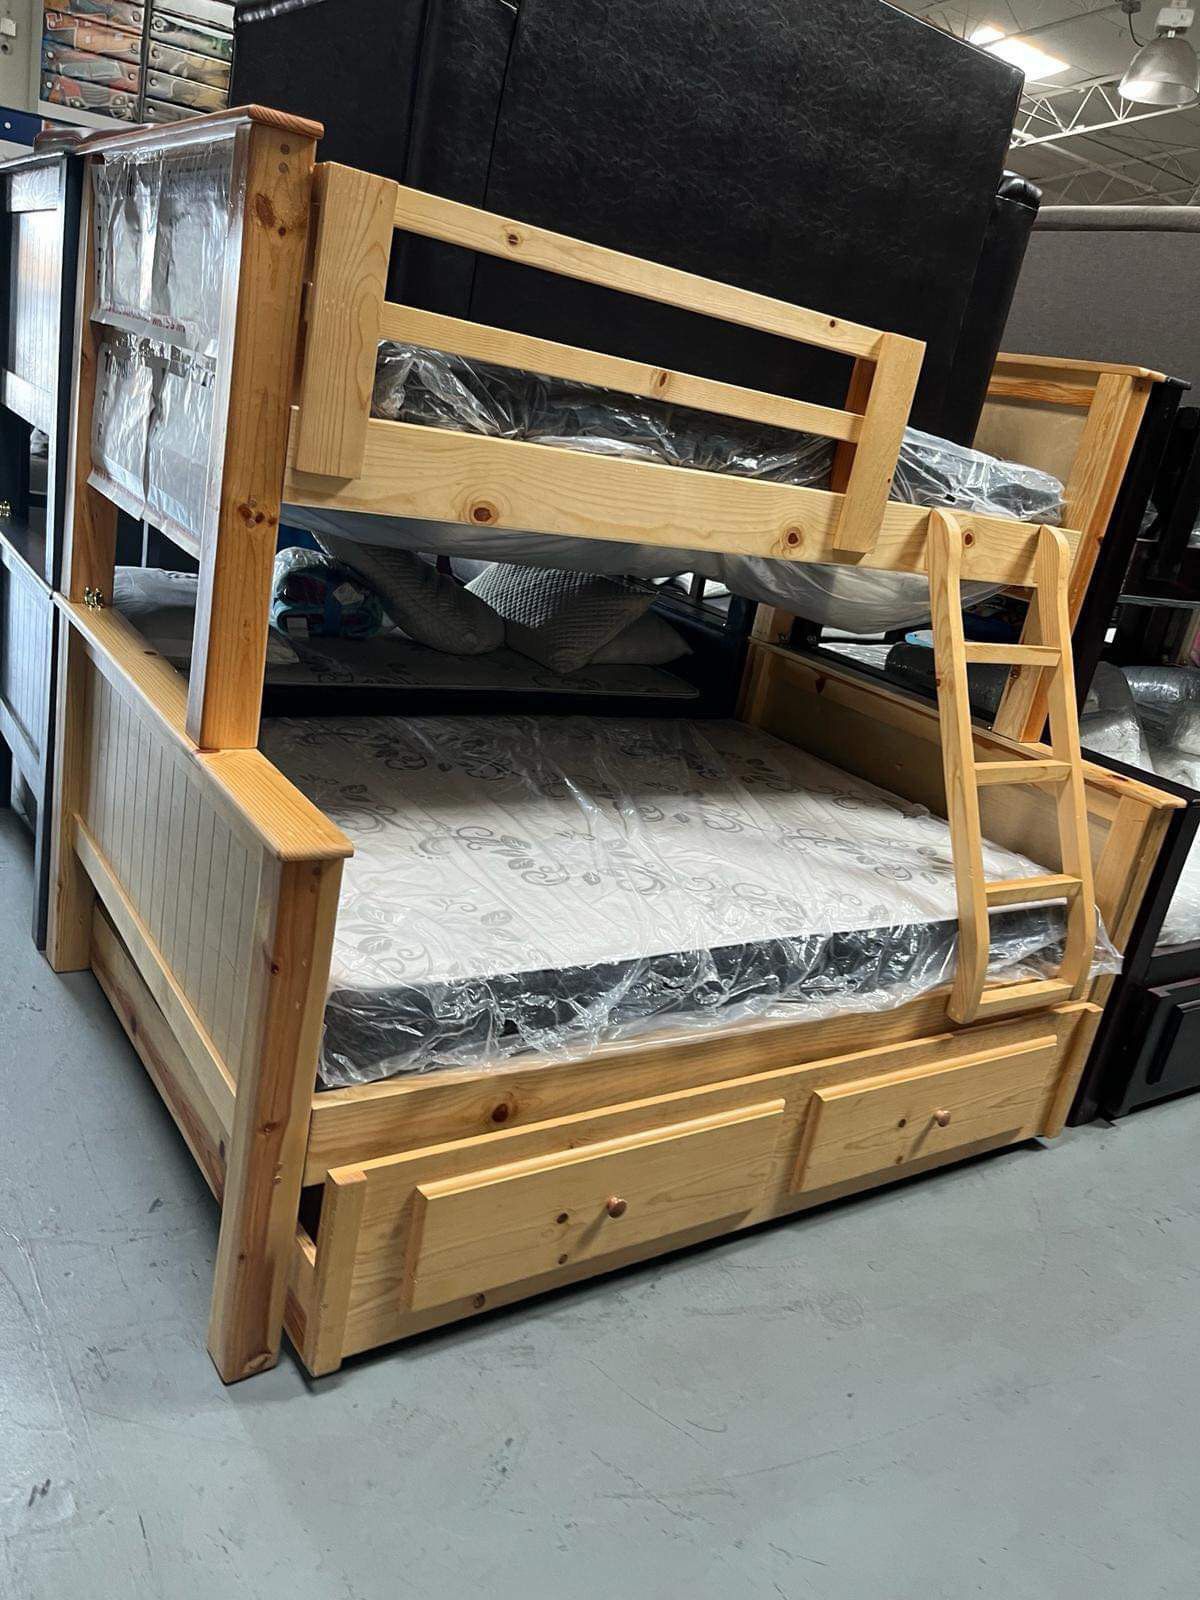 New Twin Full Full Bunk bed 